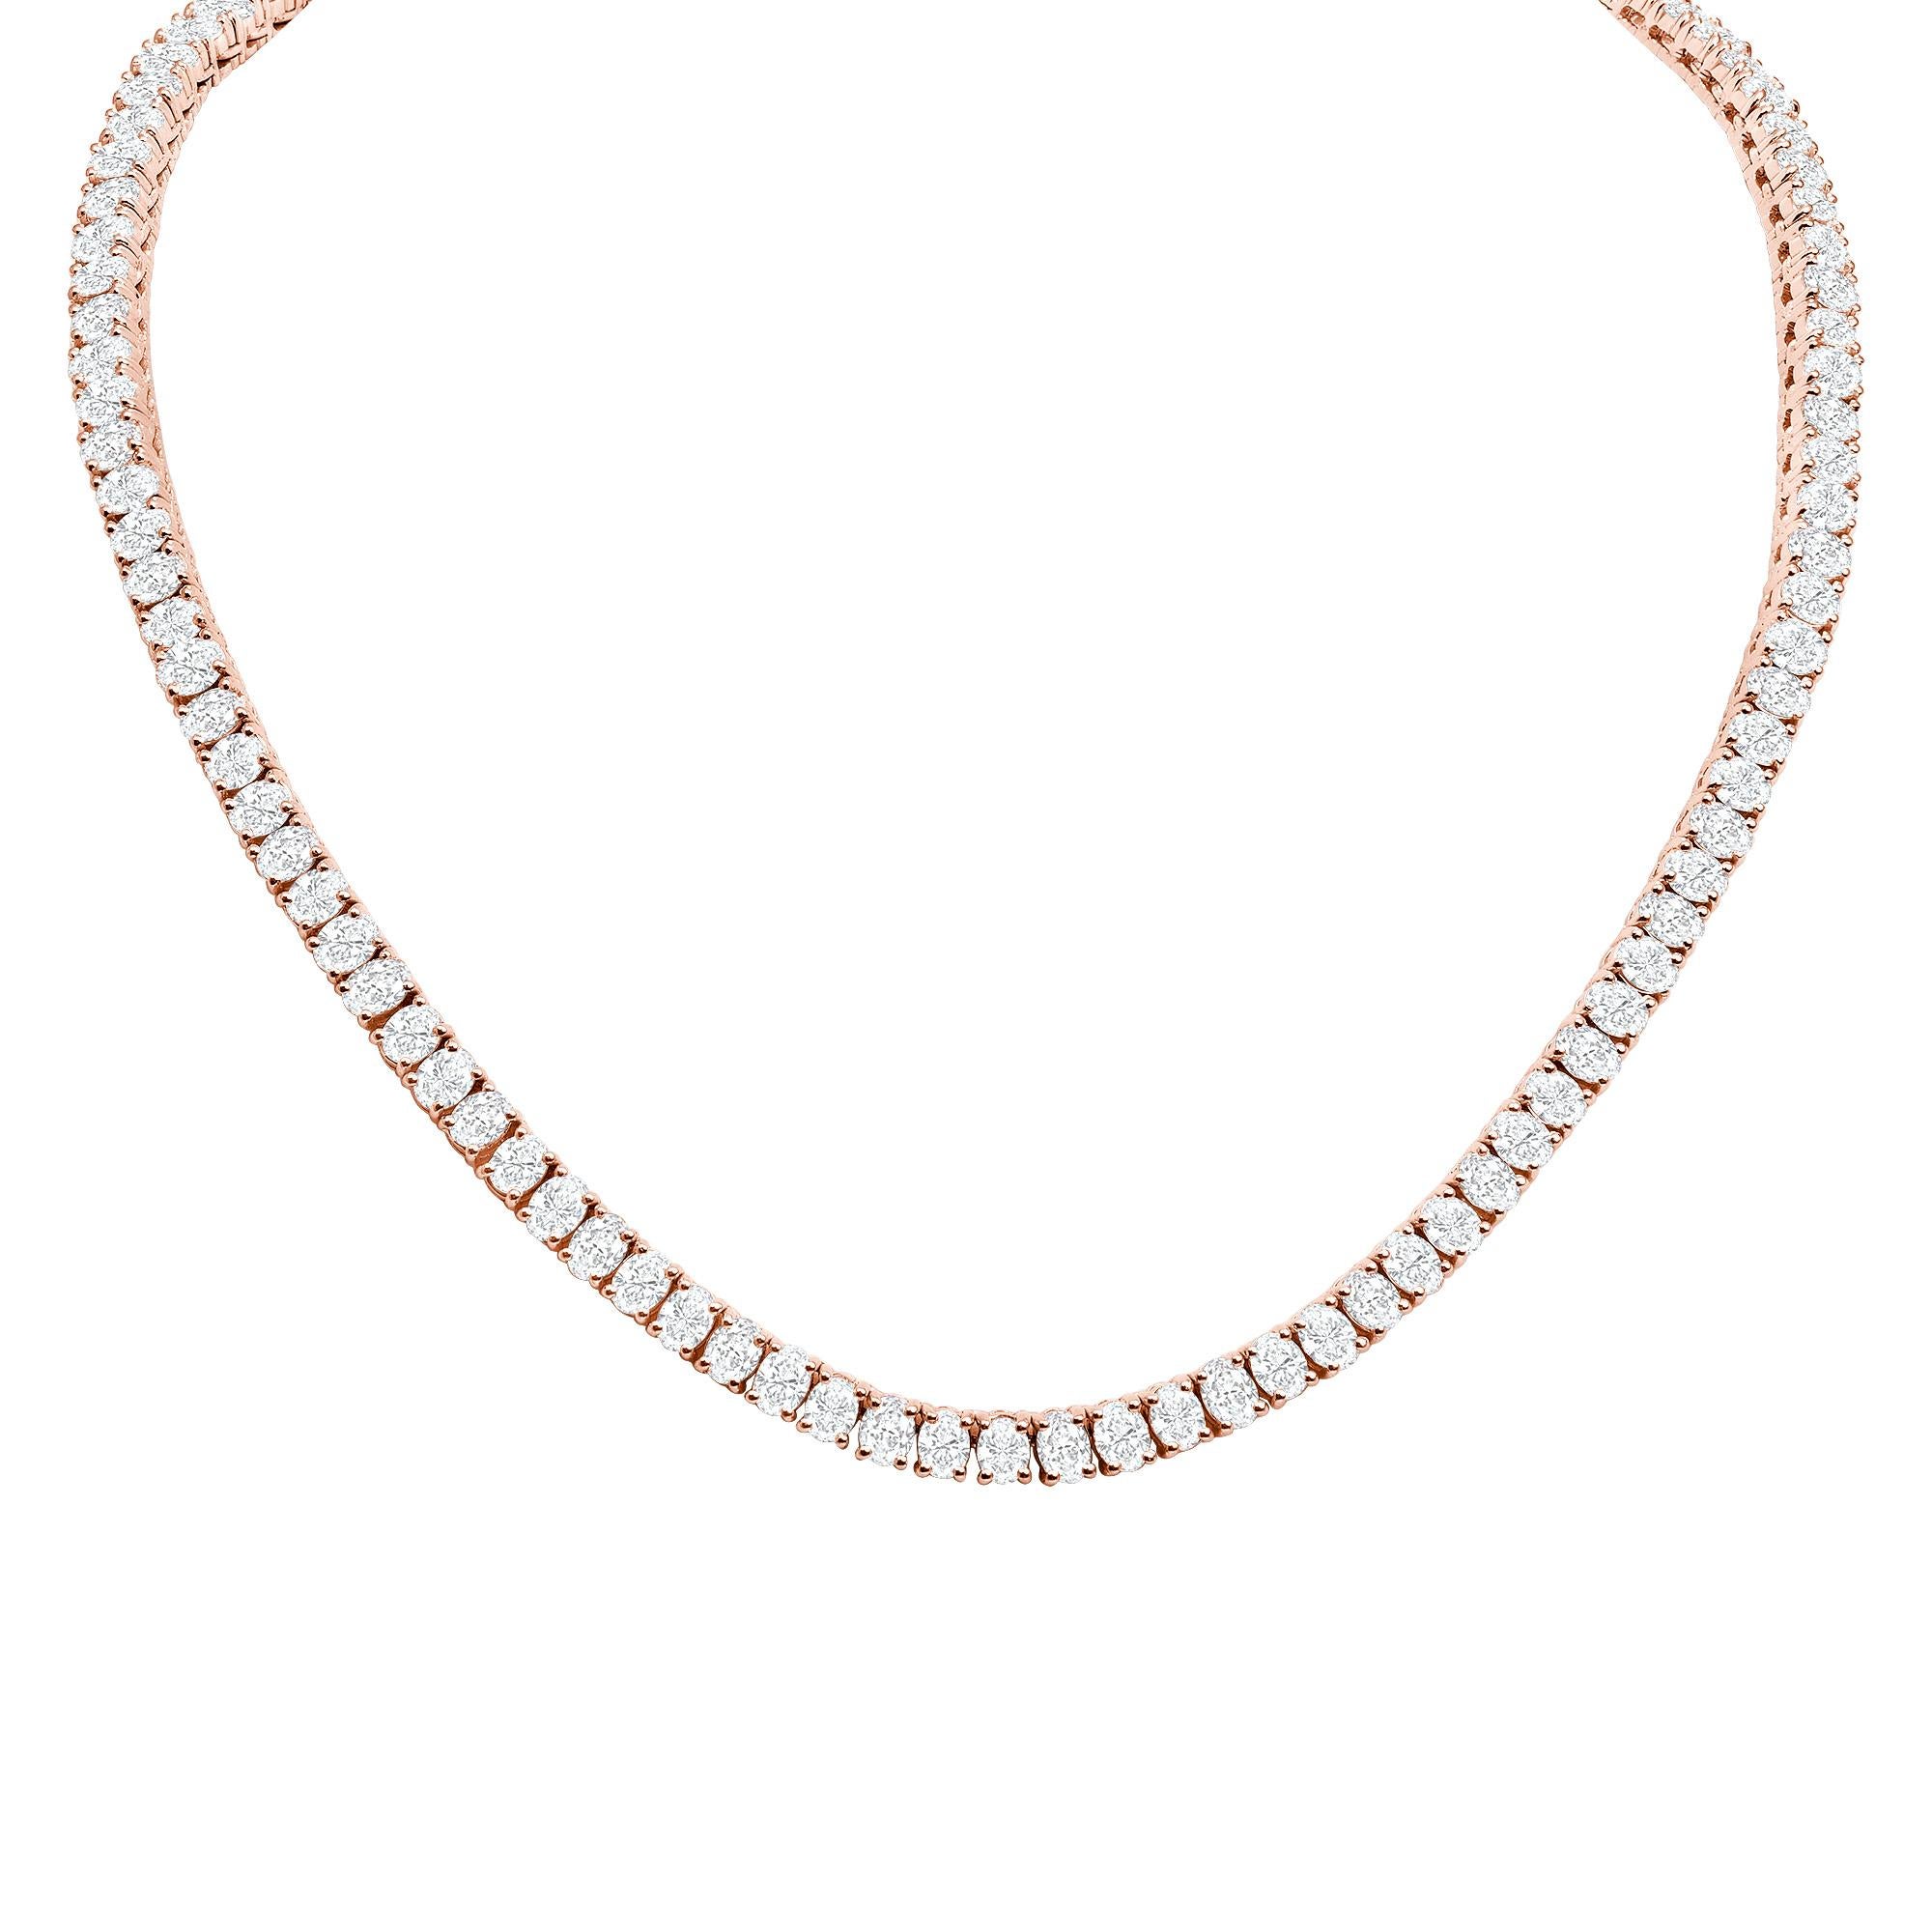 16 inch diamond tennis necklace